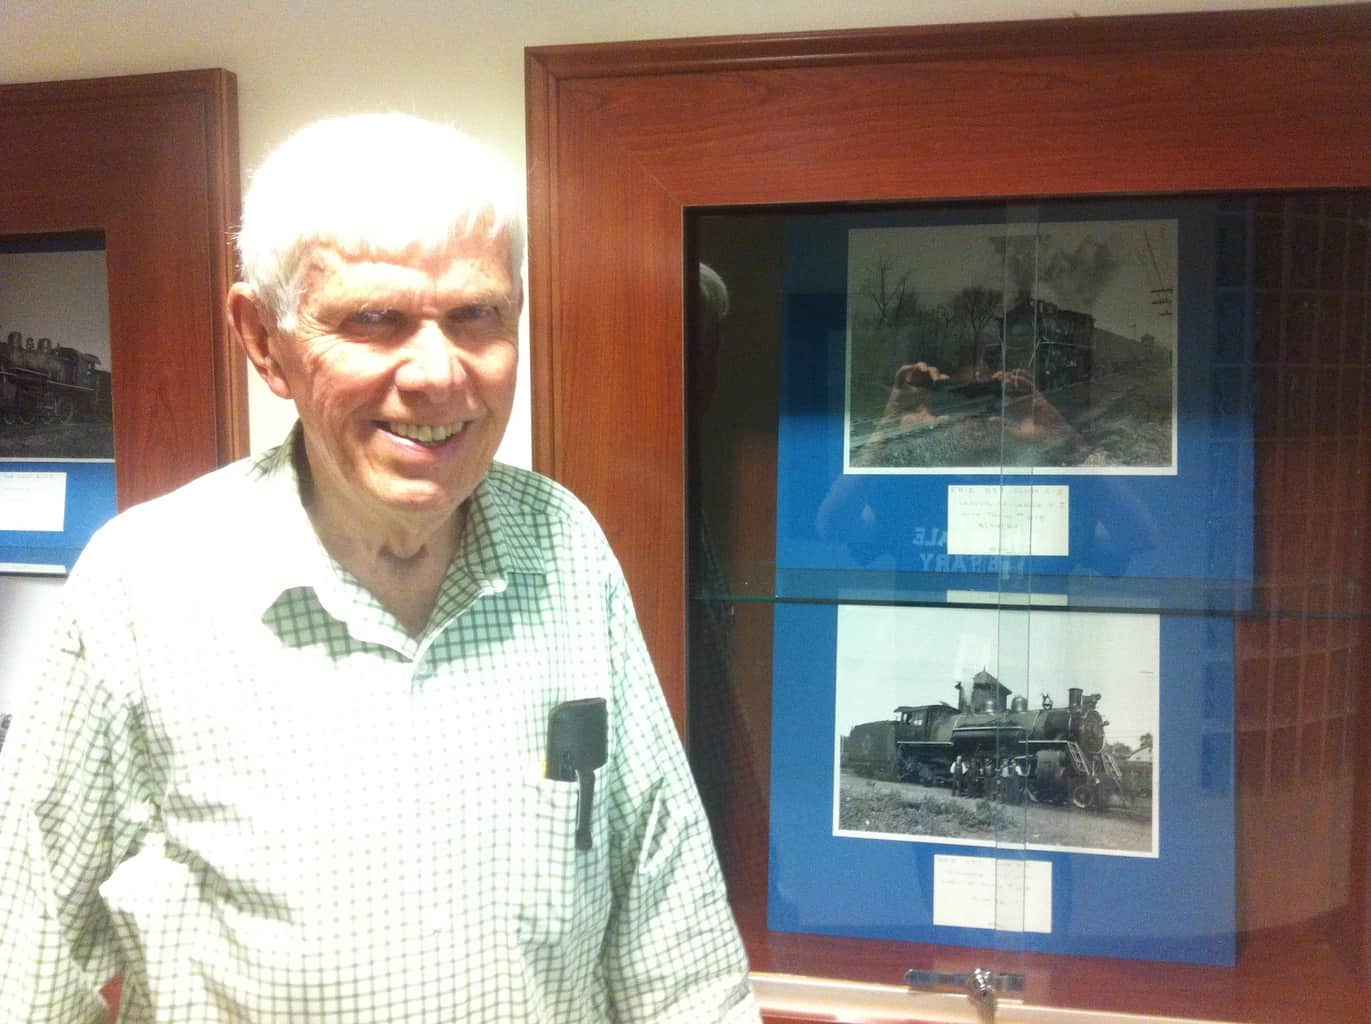 On Exhibit – Historical Locomotives of Hillsdale